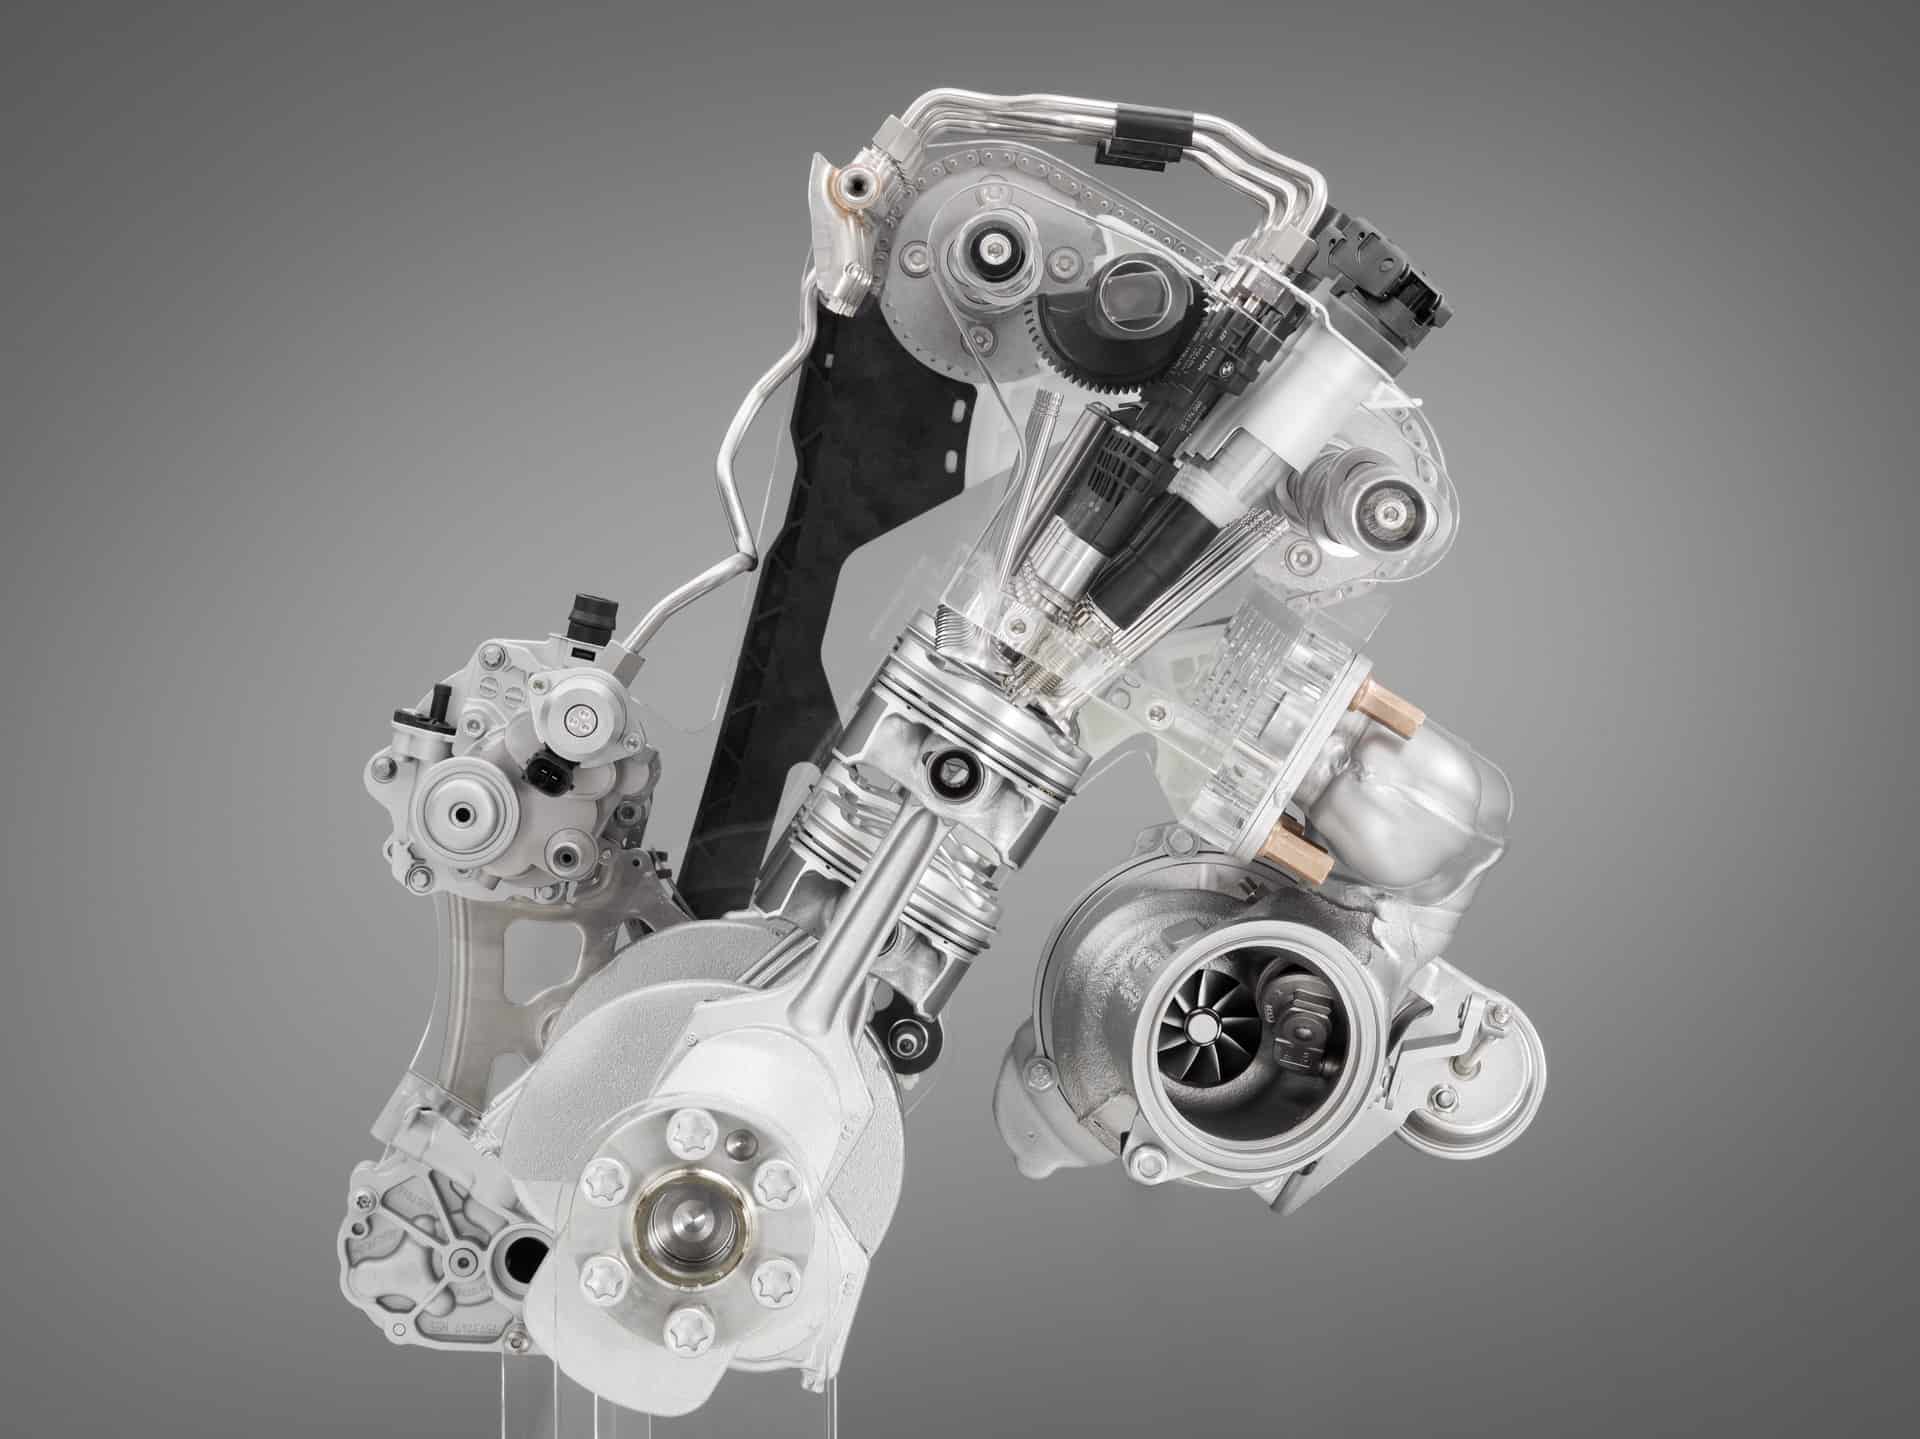 https://cdn.bmwblog.com/wp-content/uploads/2020/08/BMW-TwinPower-Turbo-Engines-1.jpg